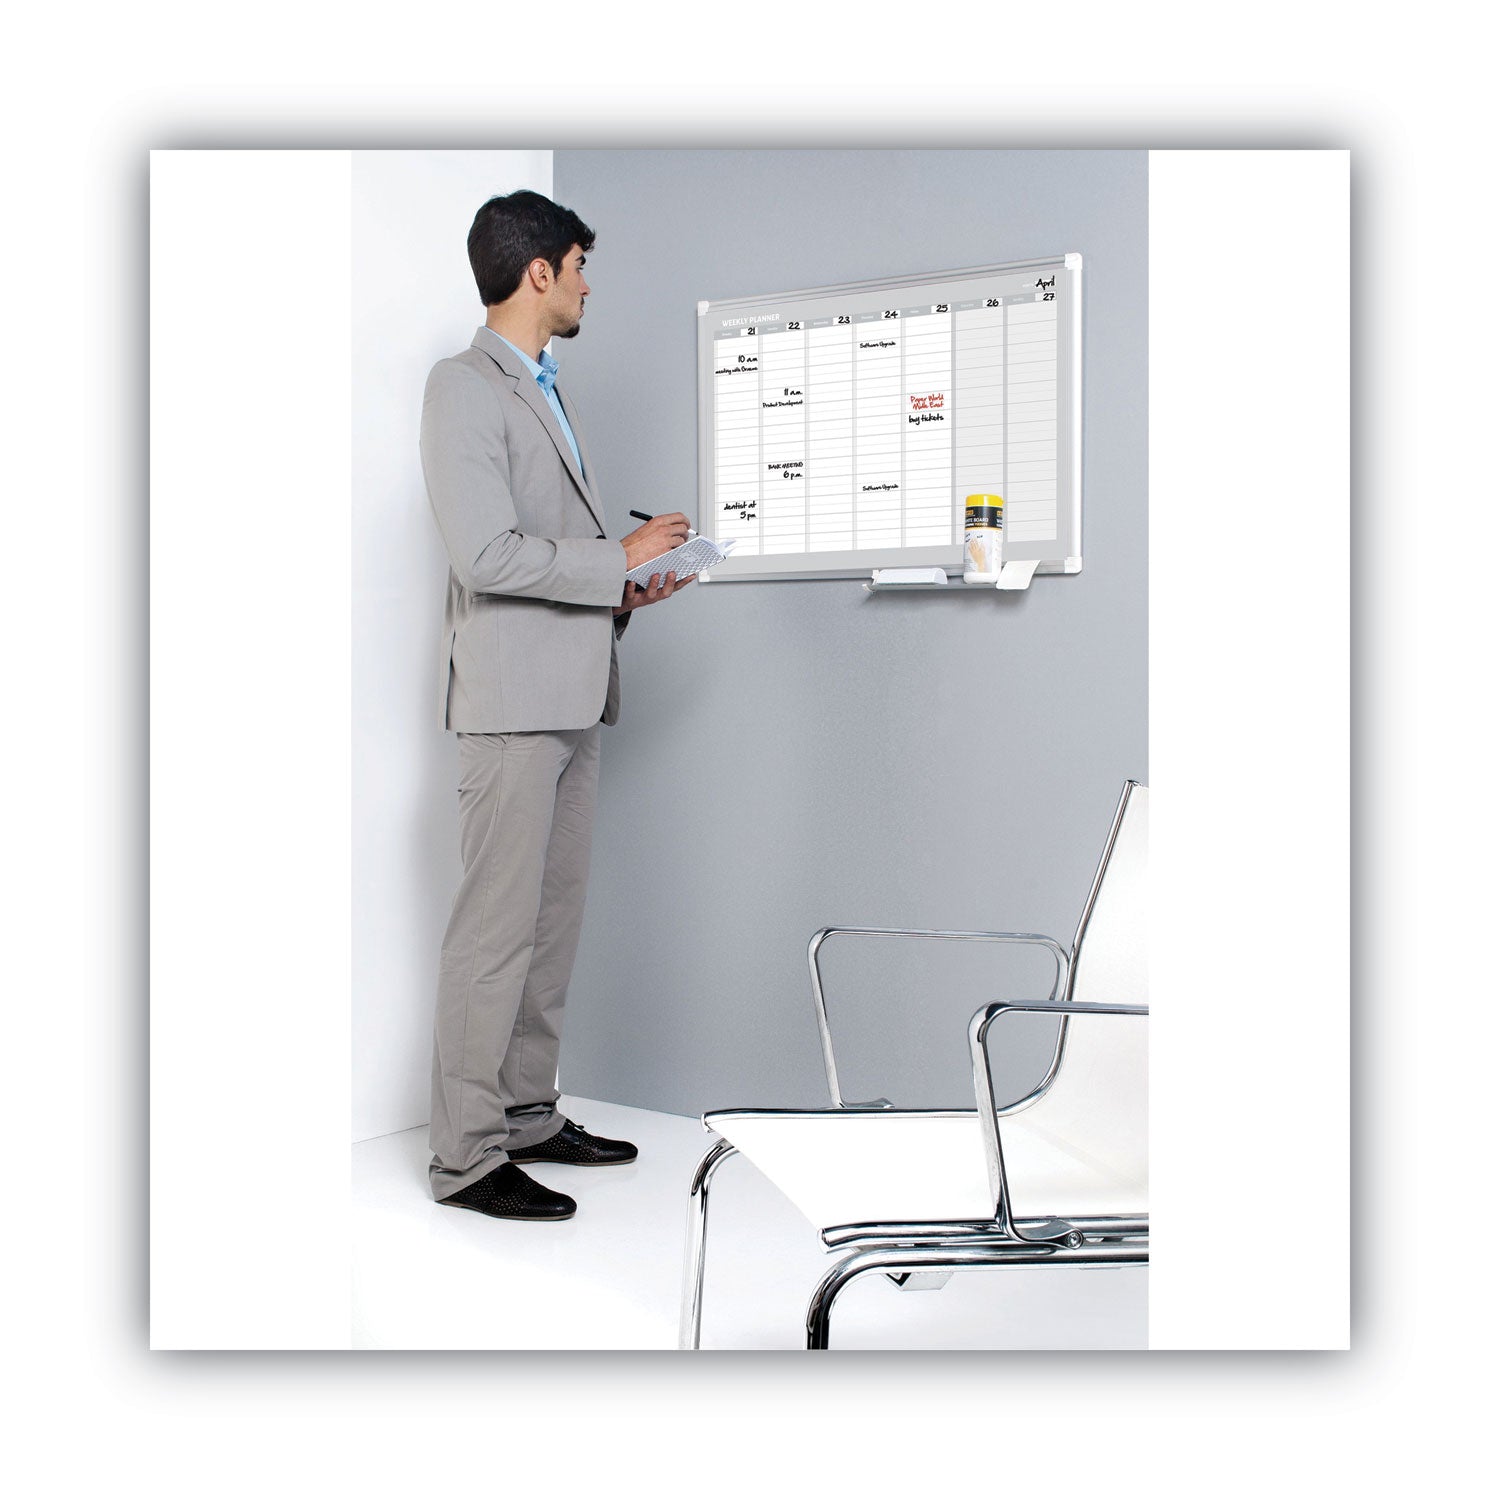 Magnetic Dry Erase Calendar Board, Weekly Calendar, 36 x 24, White Surface, Silver Aluminum Frame - 